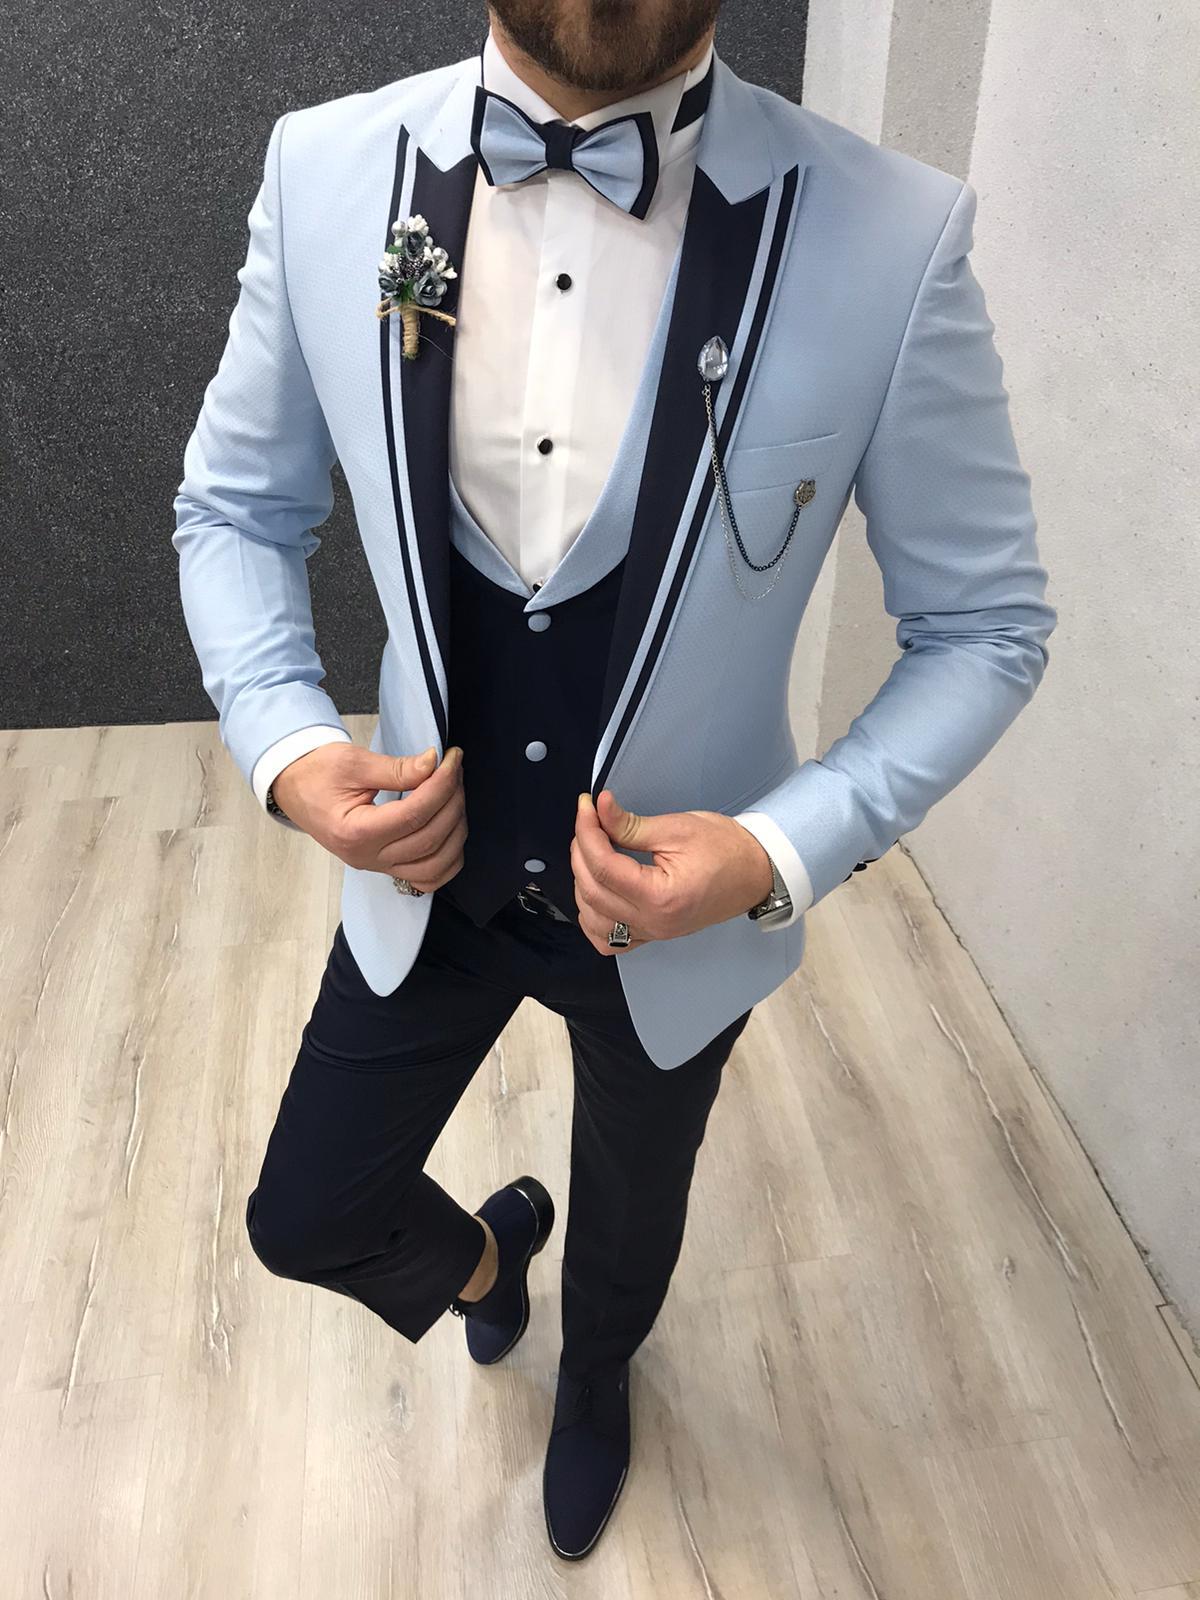 Buy Custom Sky Blue Tuxedo Wedding Suit - Free Shipping